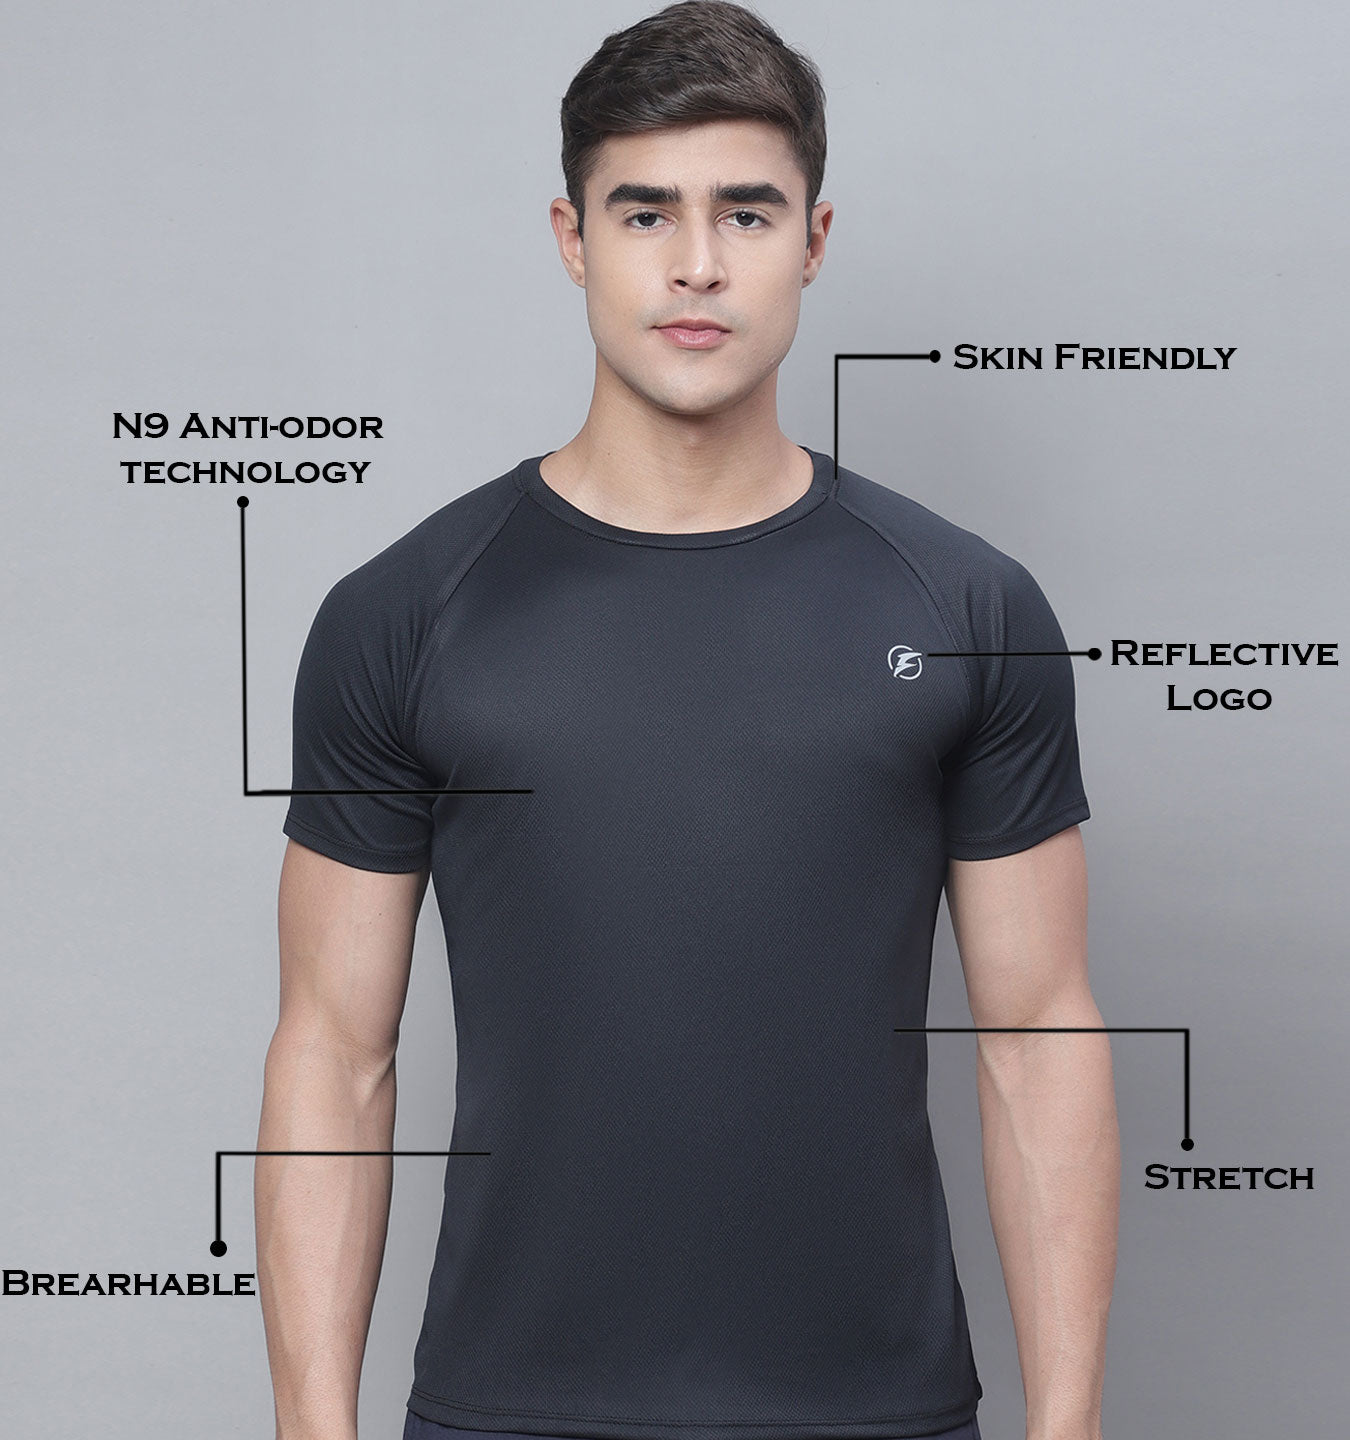 Men Half Sleeve Black Round Neck Sports T-Shirt - Friskers